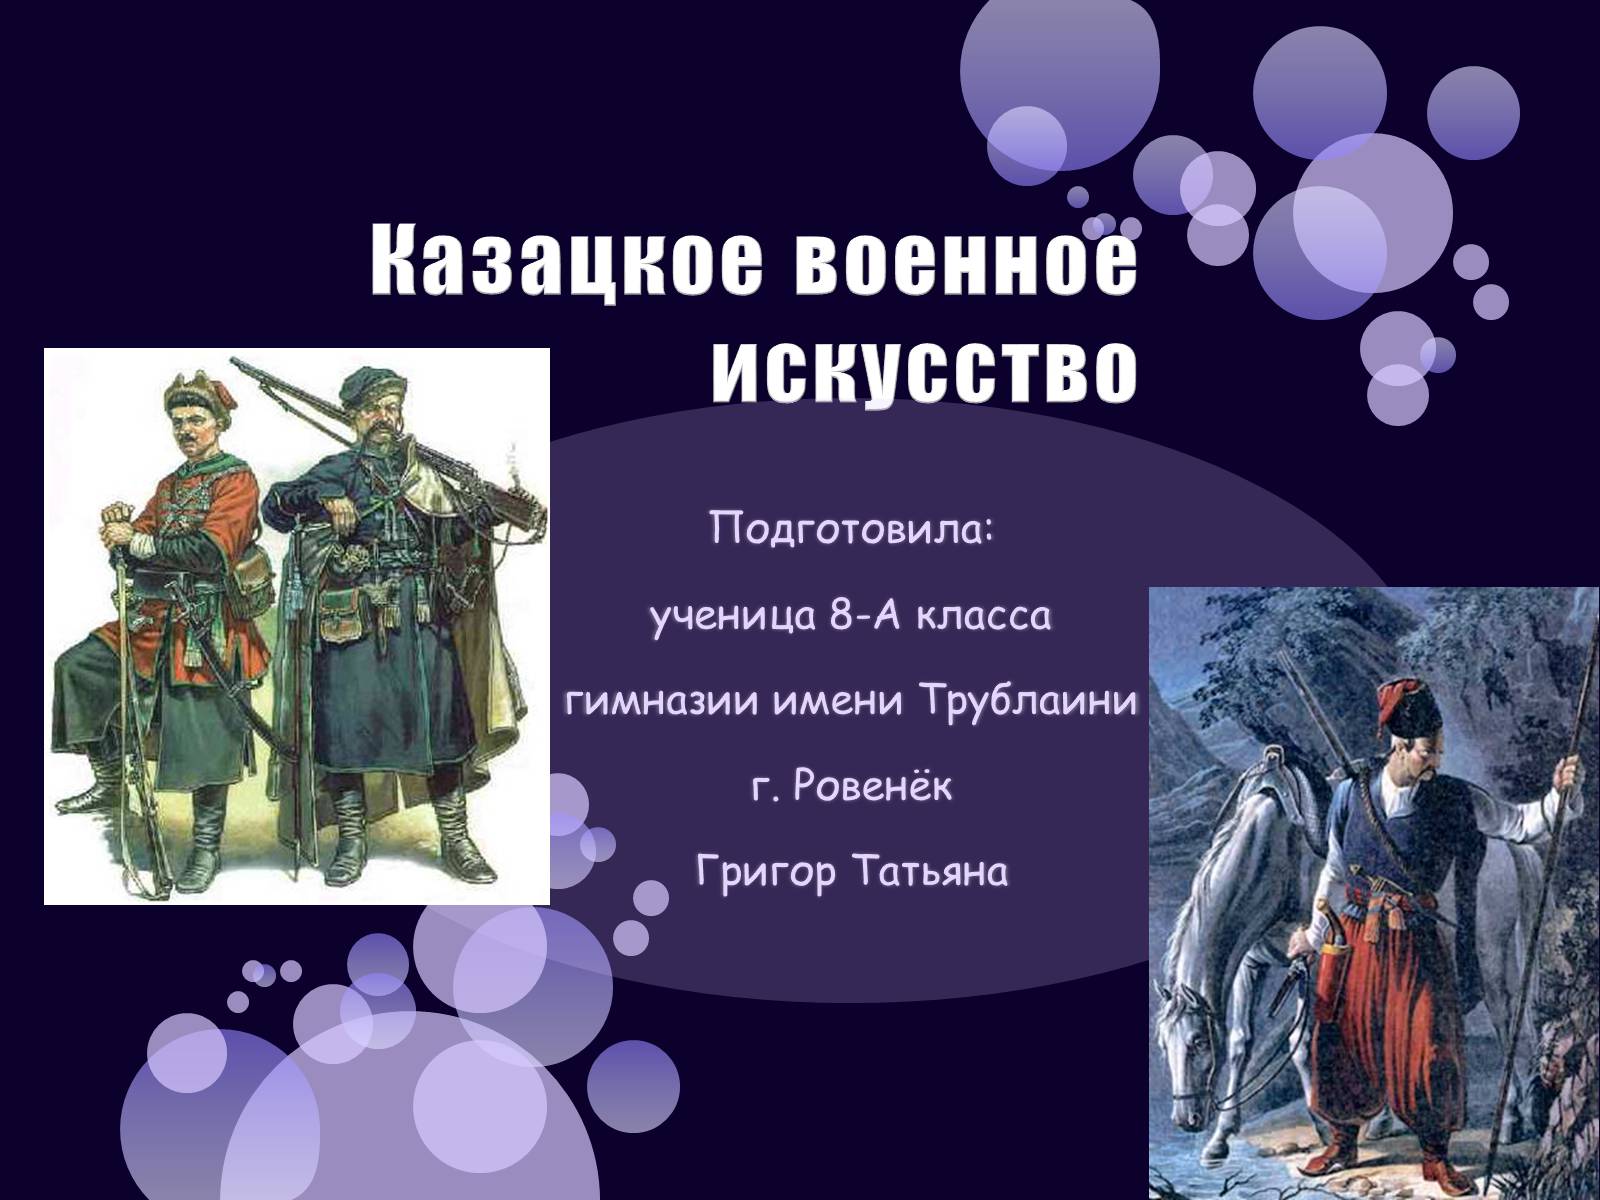 Презентація на тему «Казацкое военное искусство» - Слайд #1